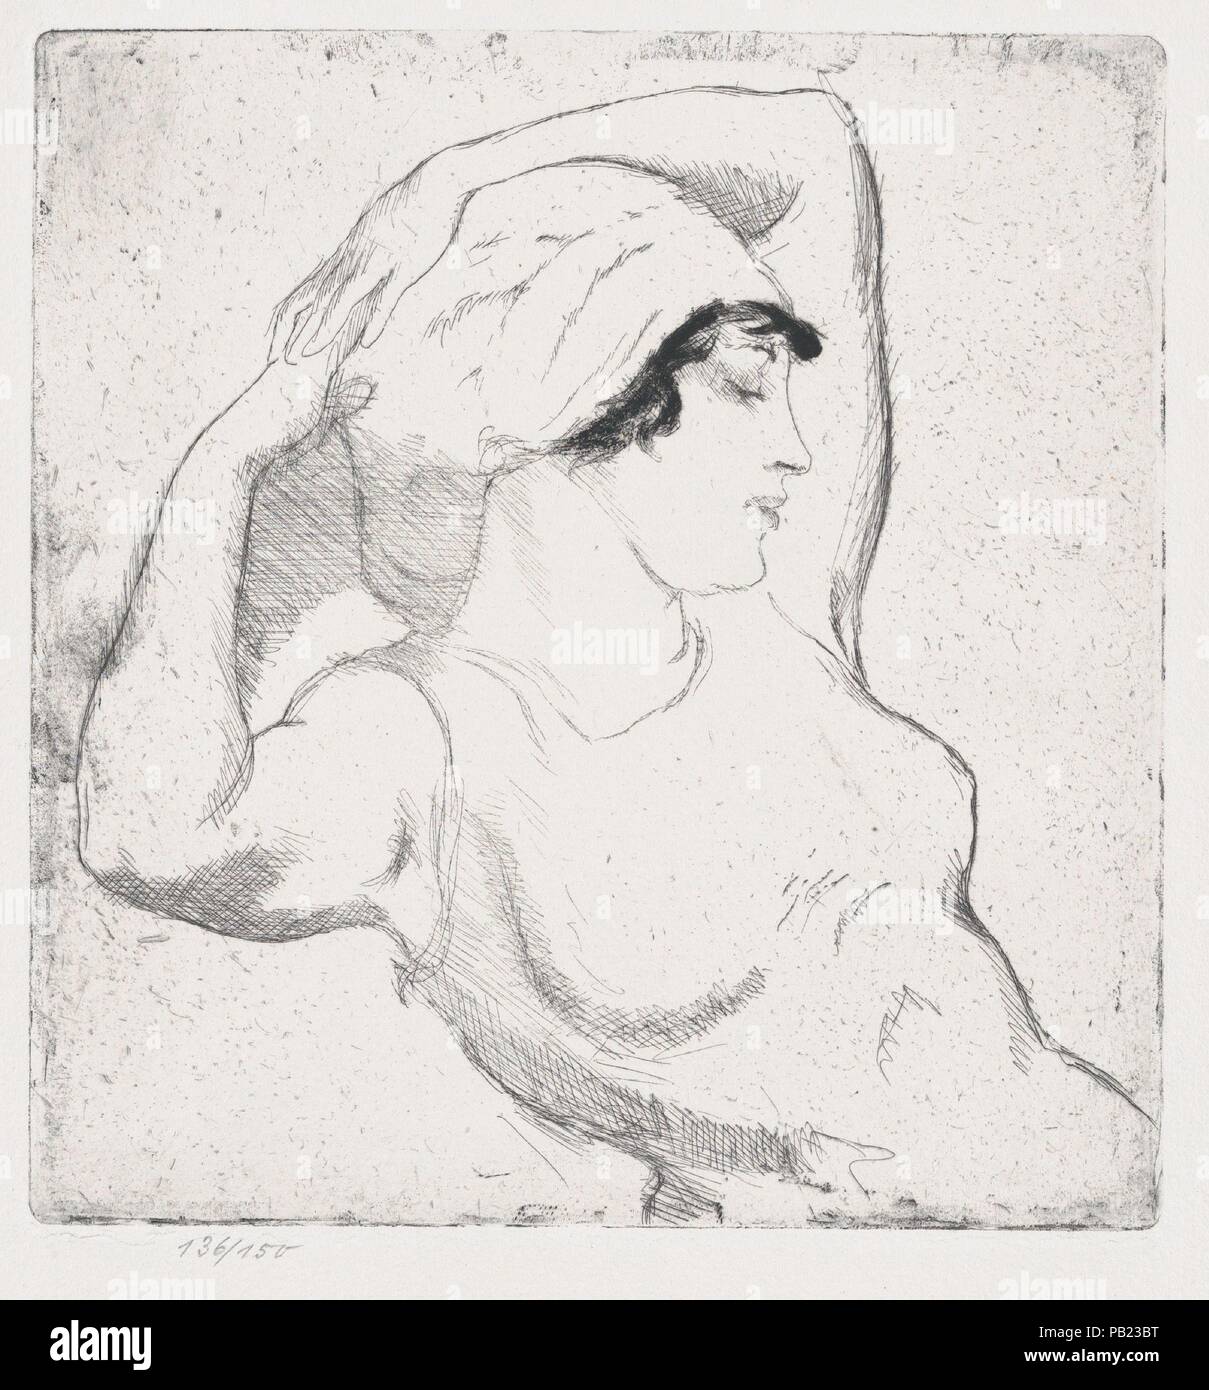 Female Figure (Frauengestalt). Artist: Emil Orlik (Austro-Hungarian, Prague 1870-1932 Berlin). Dimensions: sheet: 13 7/8 x 10 3/16 in. (35.2 x 25.9 cm)  plate: 6 9/16 x 6 1/2 in. (16.7 x 16.5 cm). Series/Portfolio: 136/150. Date: 1919. Museum: Metropolitan Museum of Art, New York, USA. Stock Photo